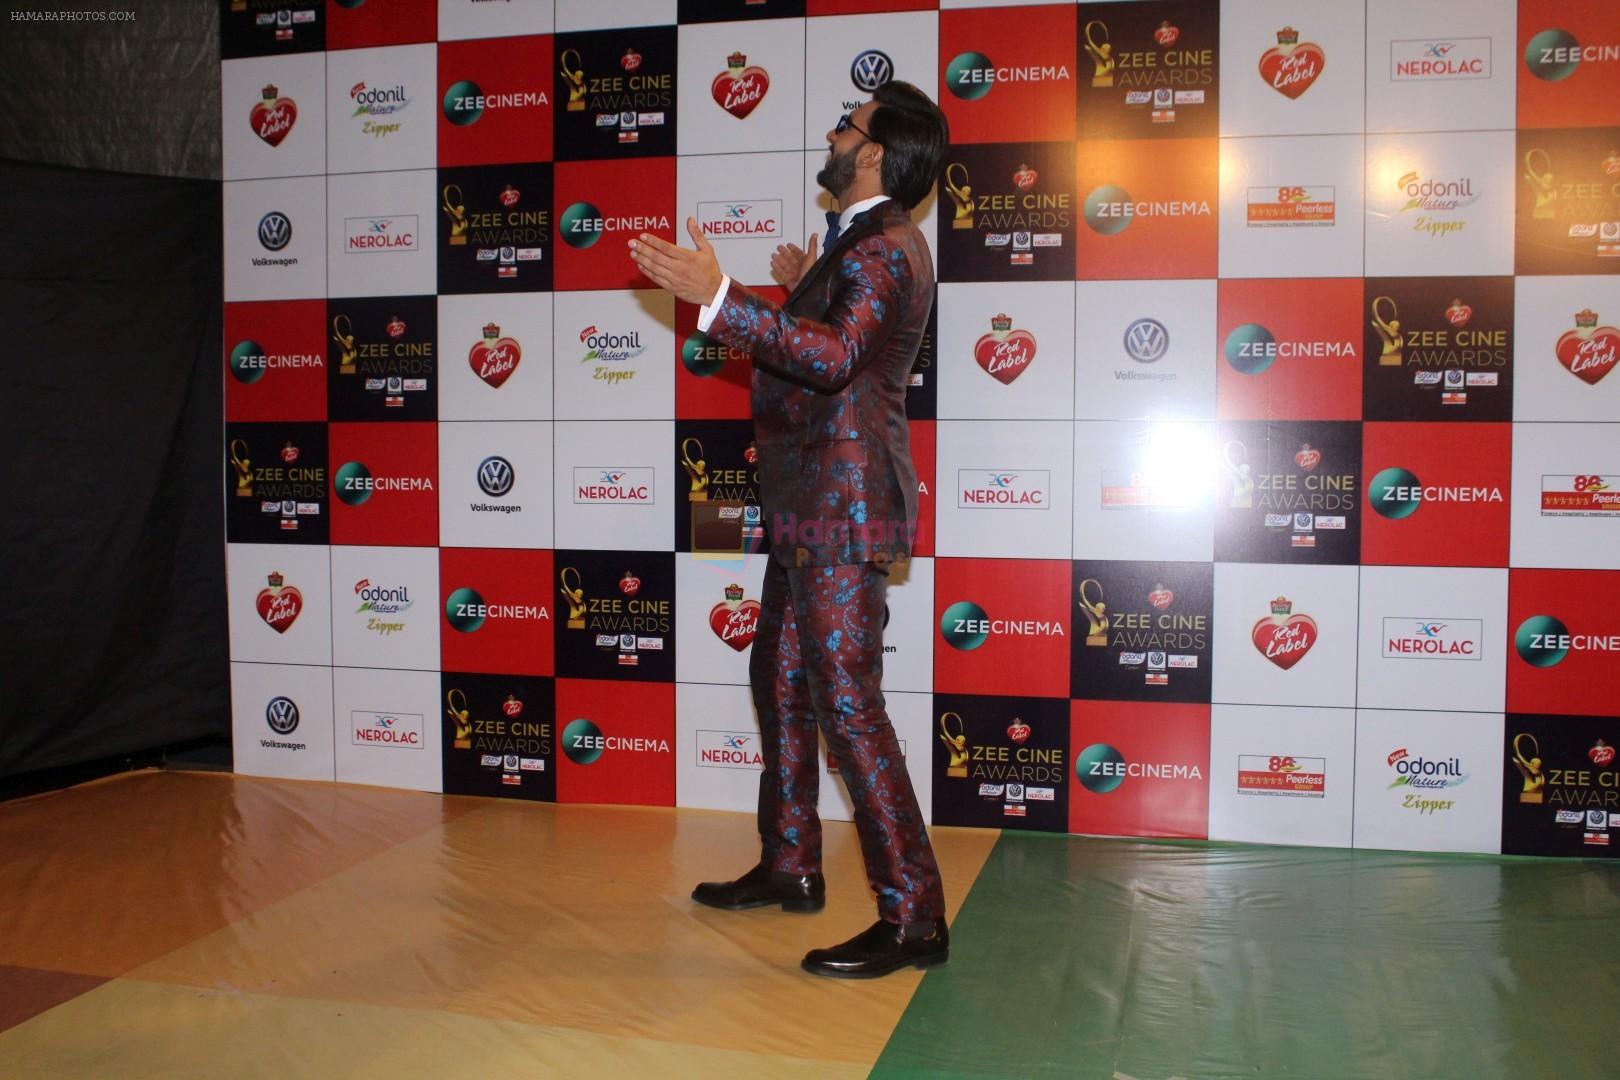 Ranveer Singh at the Red Carpet Event Of Zee Cine Awards 2018 on 19th Dec 2017